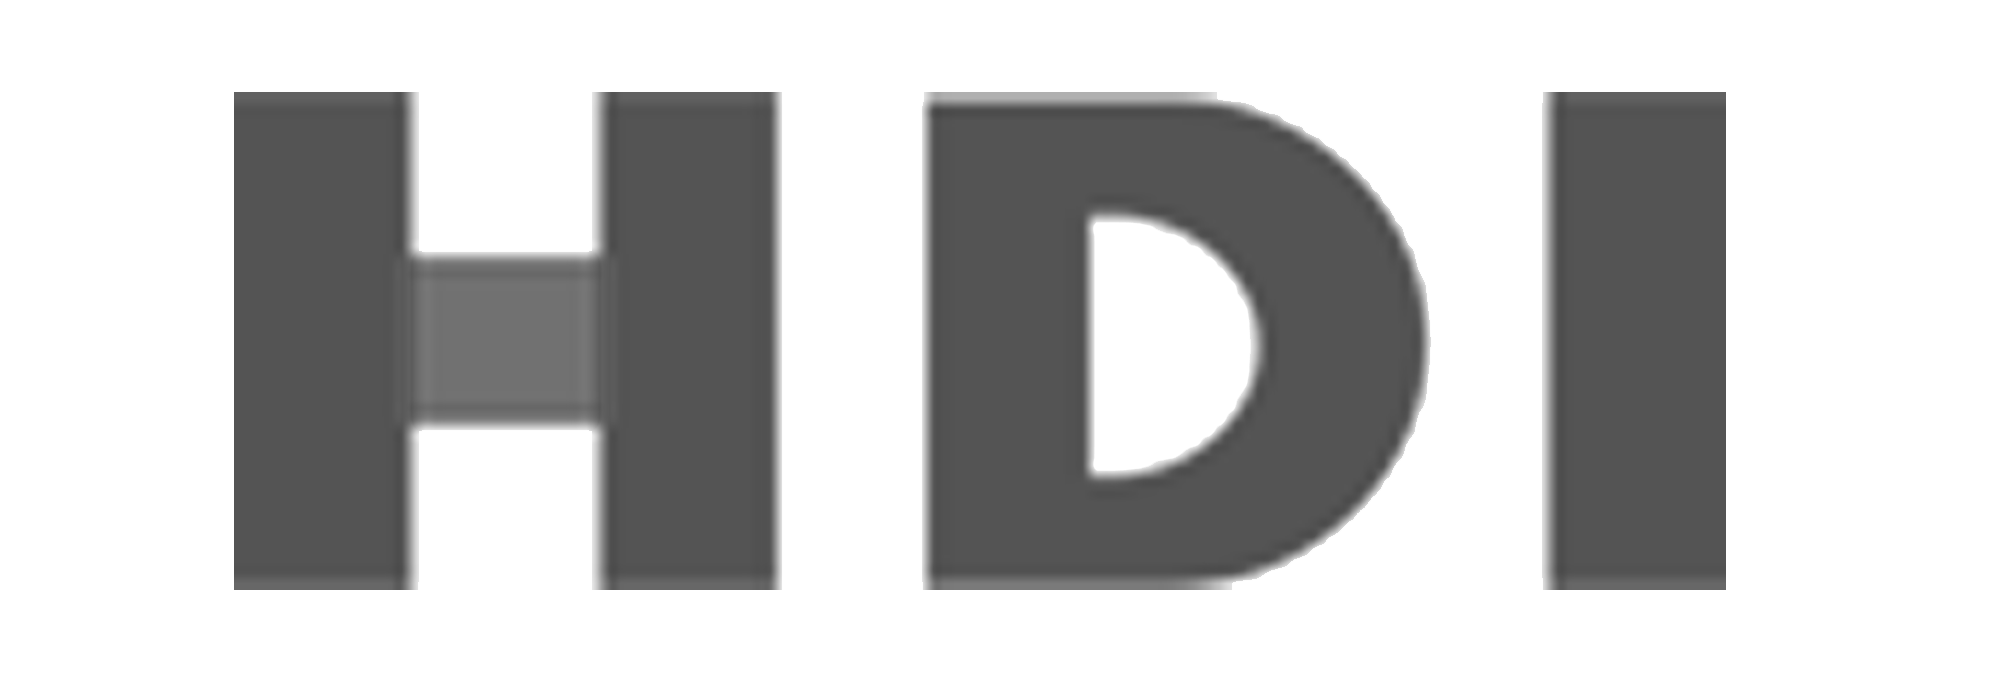 HDI_logo-1